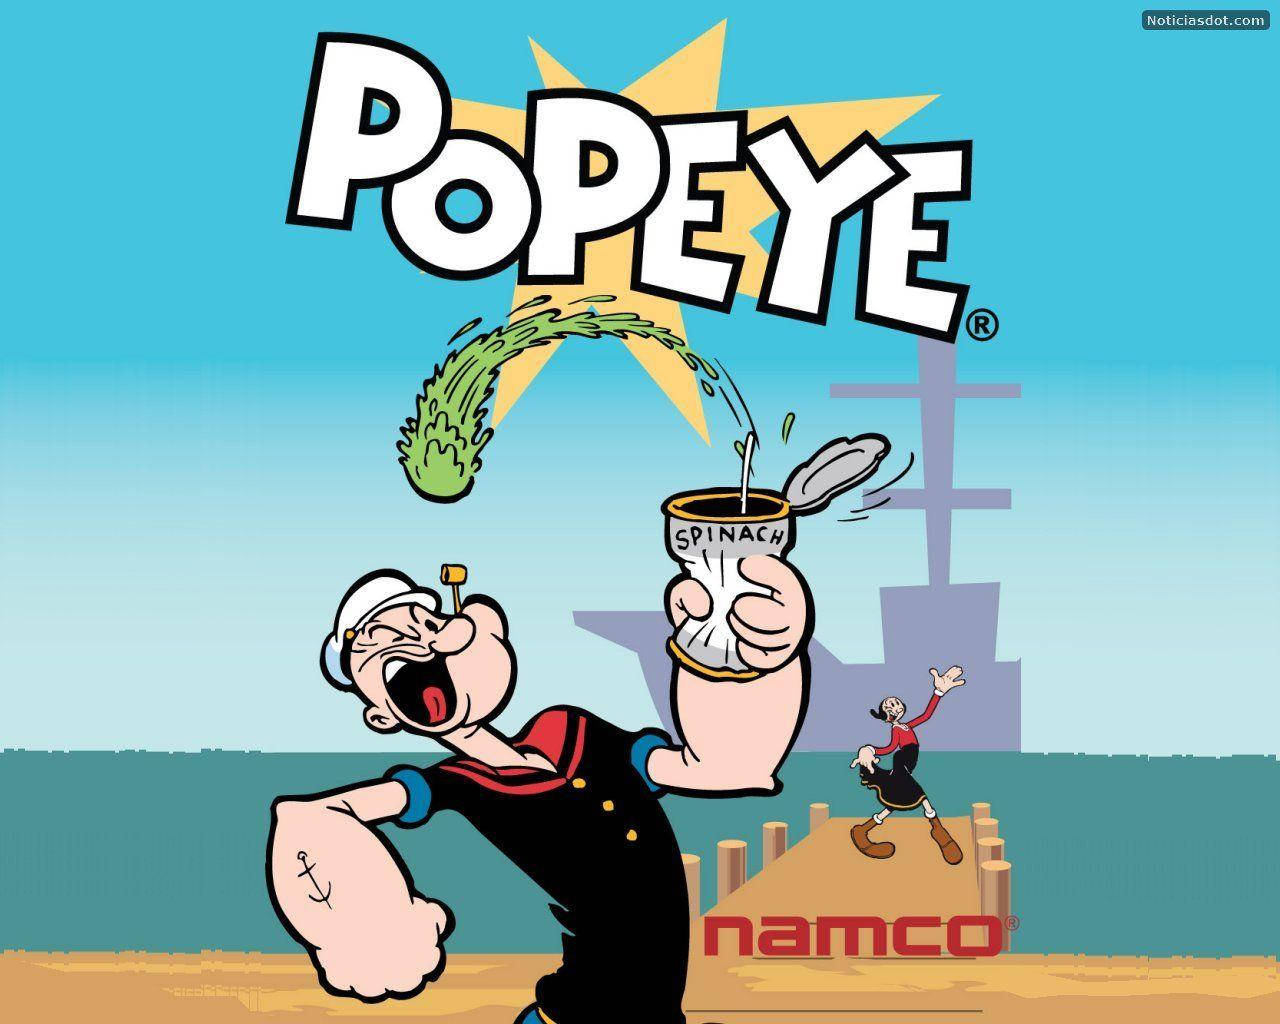 Free Popeye Wallpaper Downloads, [100+] Popeye Wallpapers for FREE |  